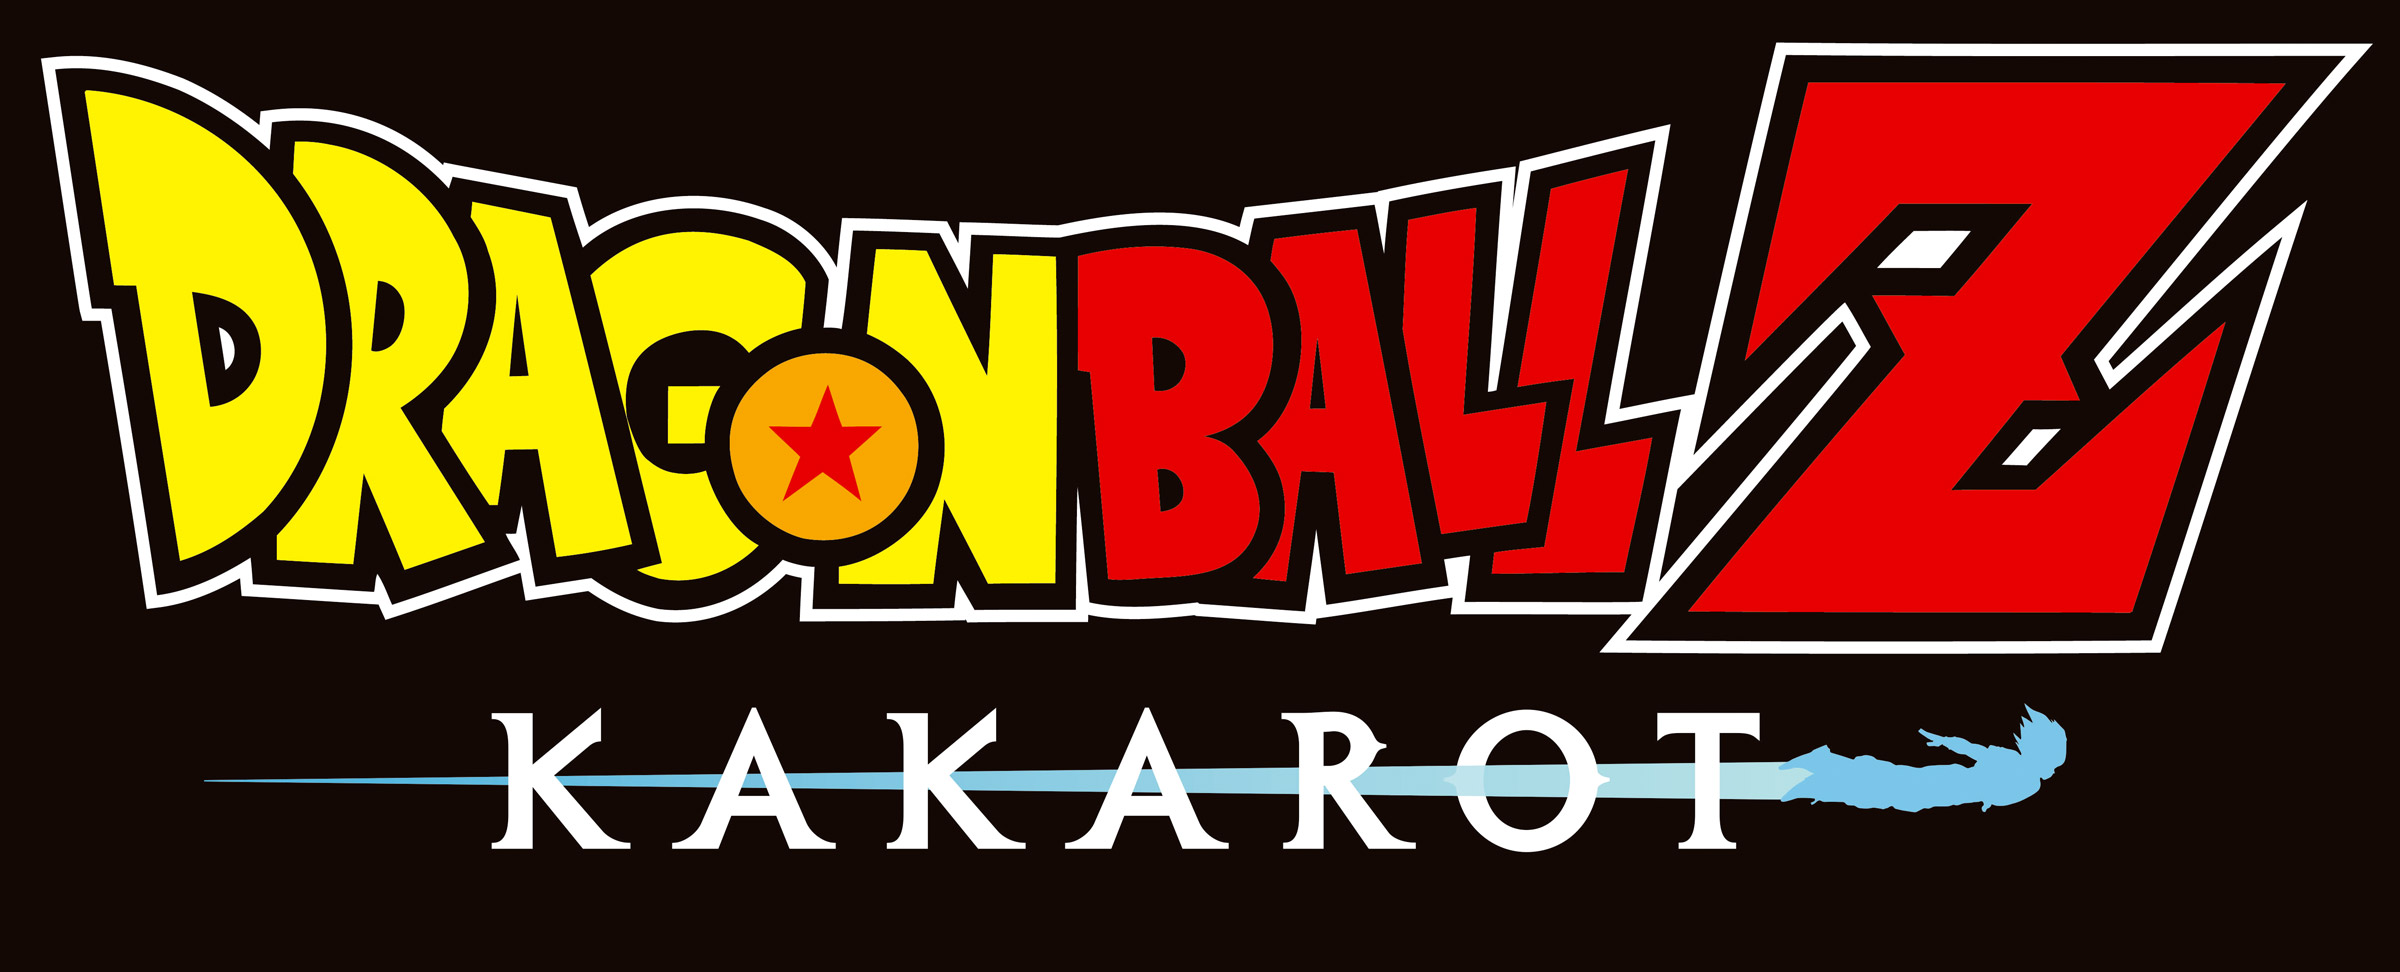 Dragon Ball Z Kakarot logo 003